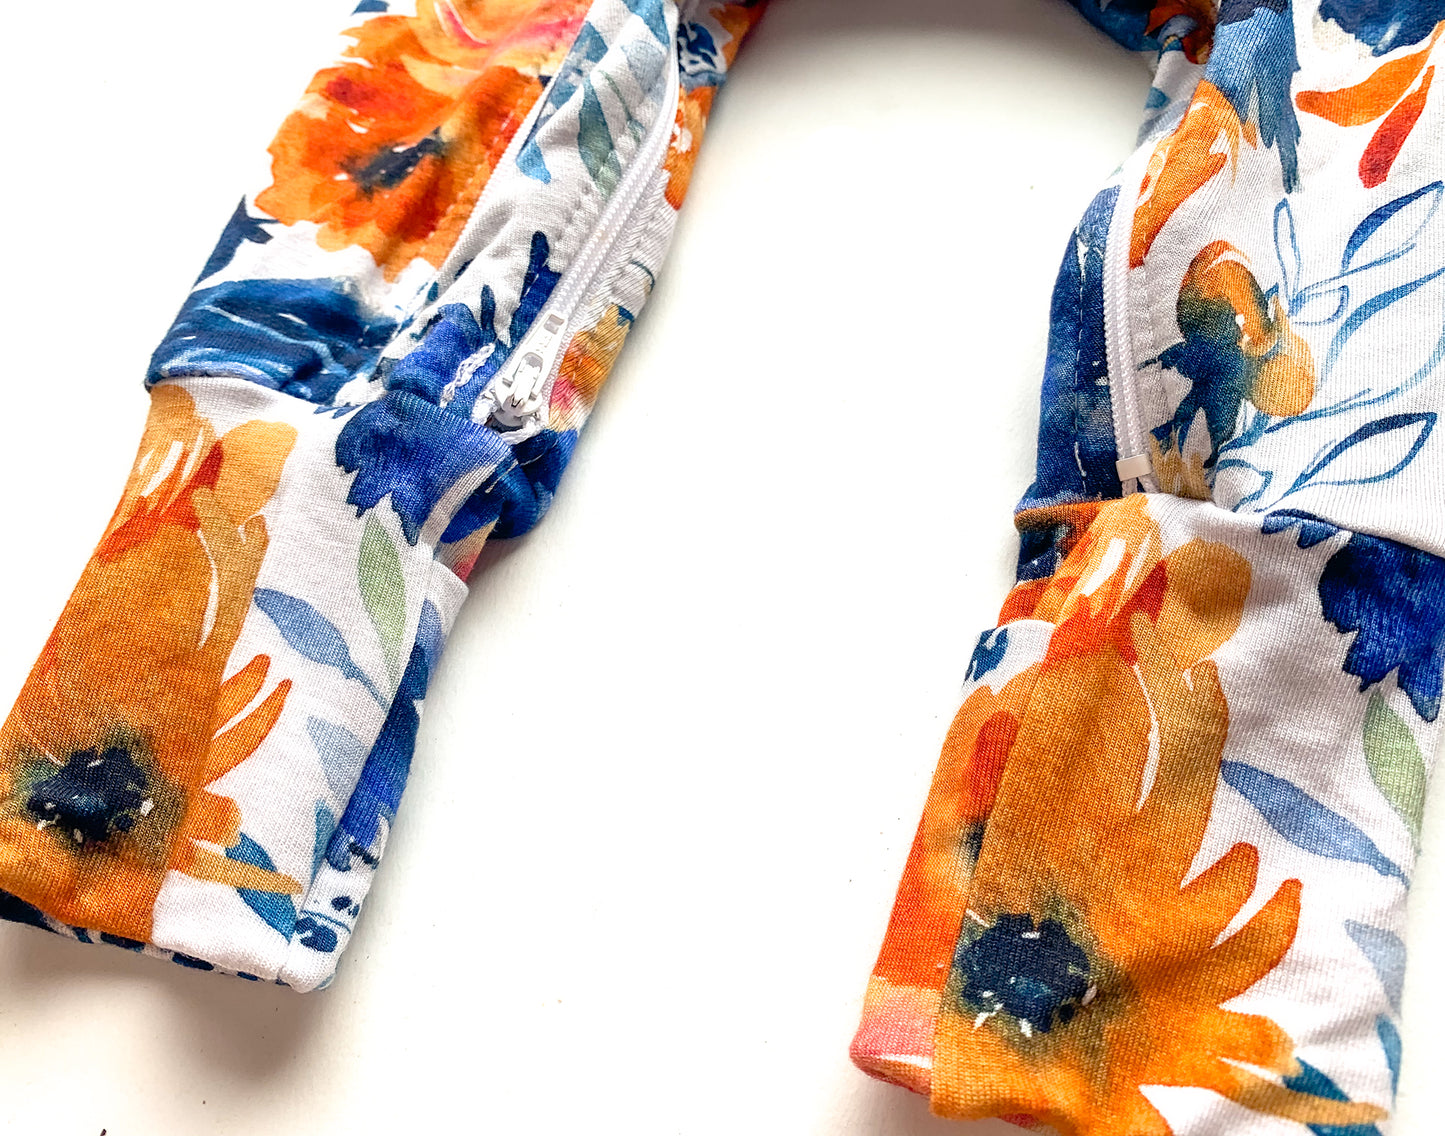 Double Zipper Bamboo Baby Sleeper | Navy Orange Floral - One Kind Clothing, LLC